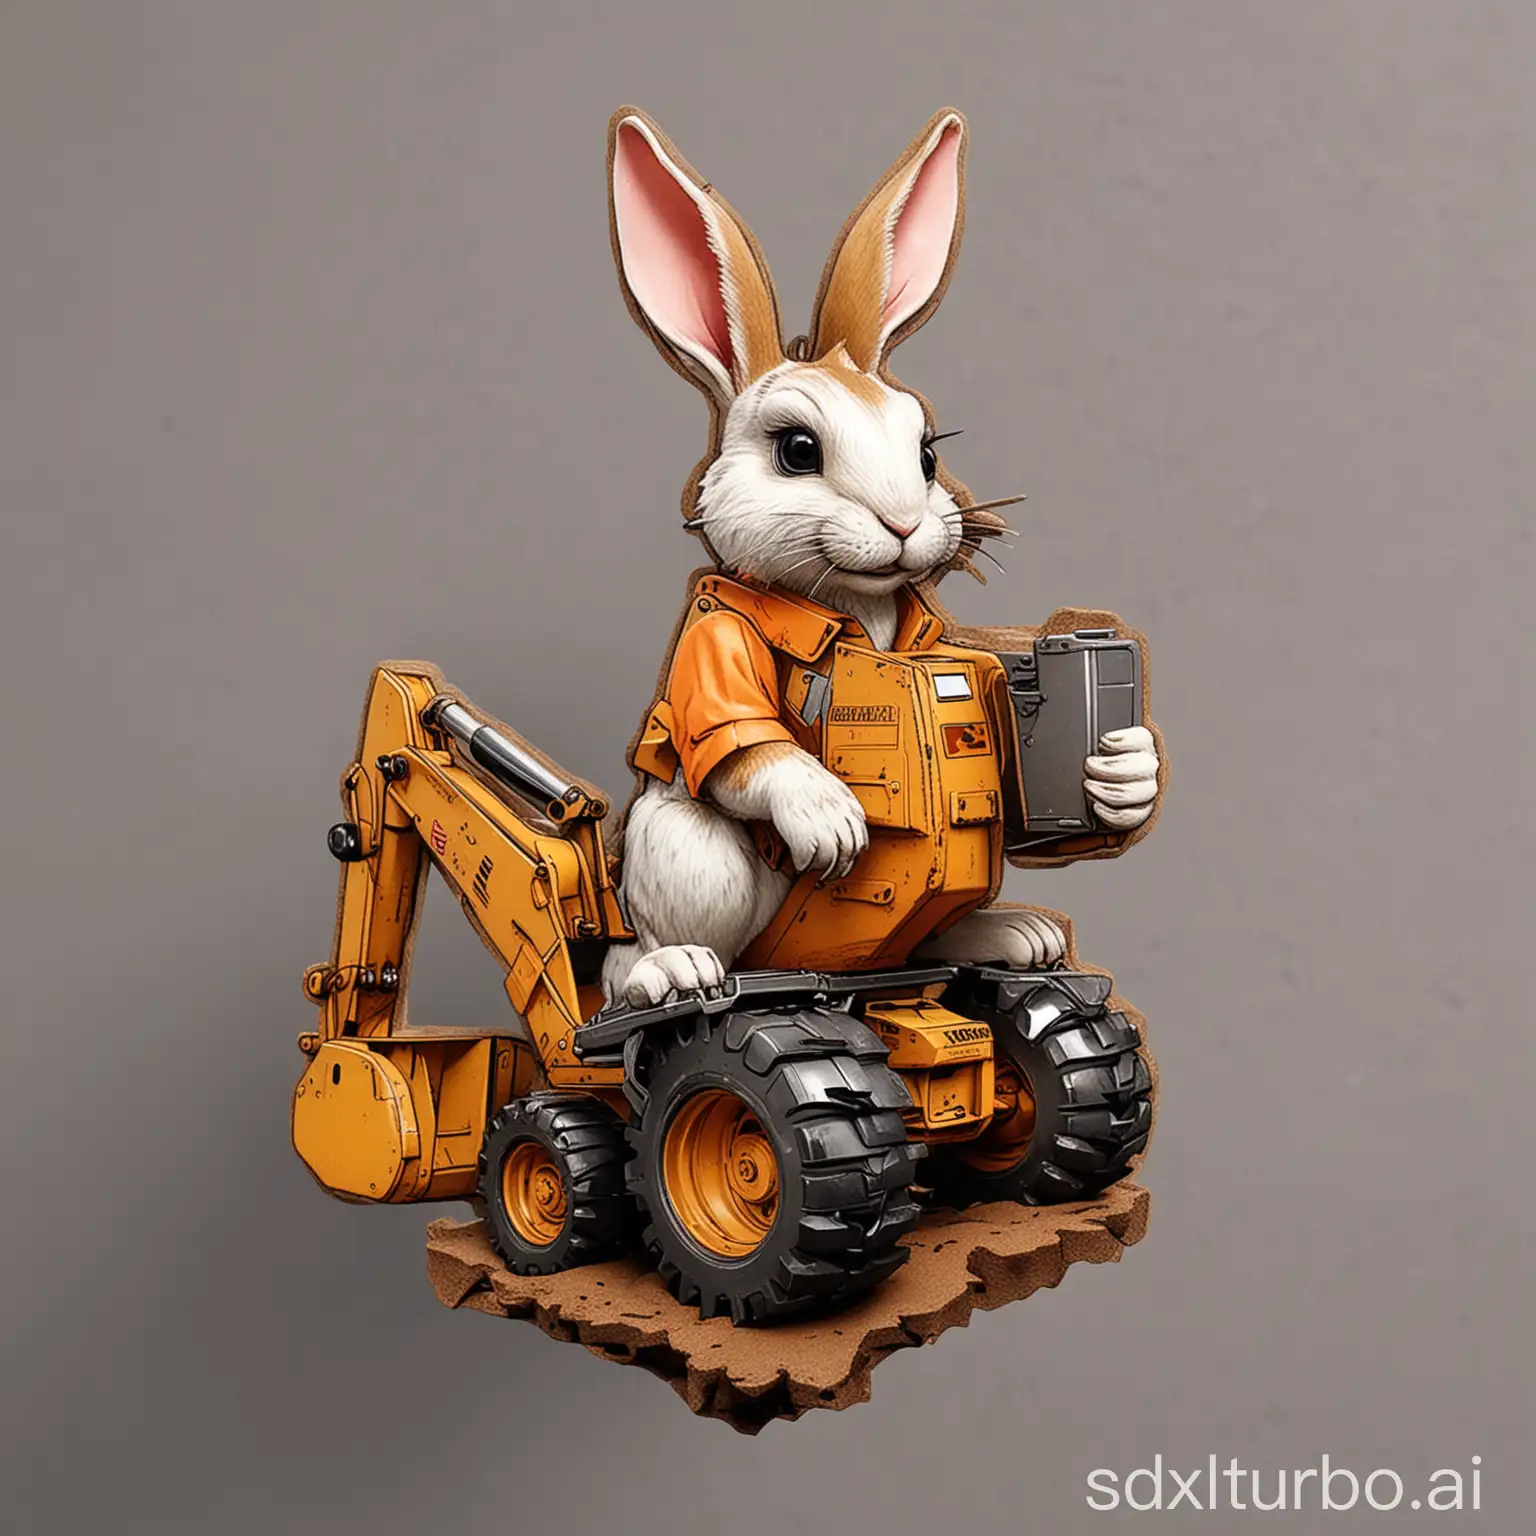 rabbit on excavator, carton style, badge style, hight quality